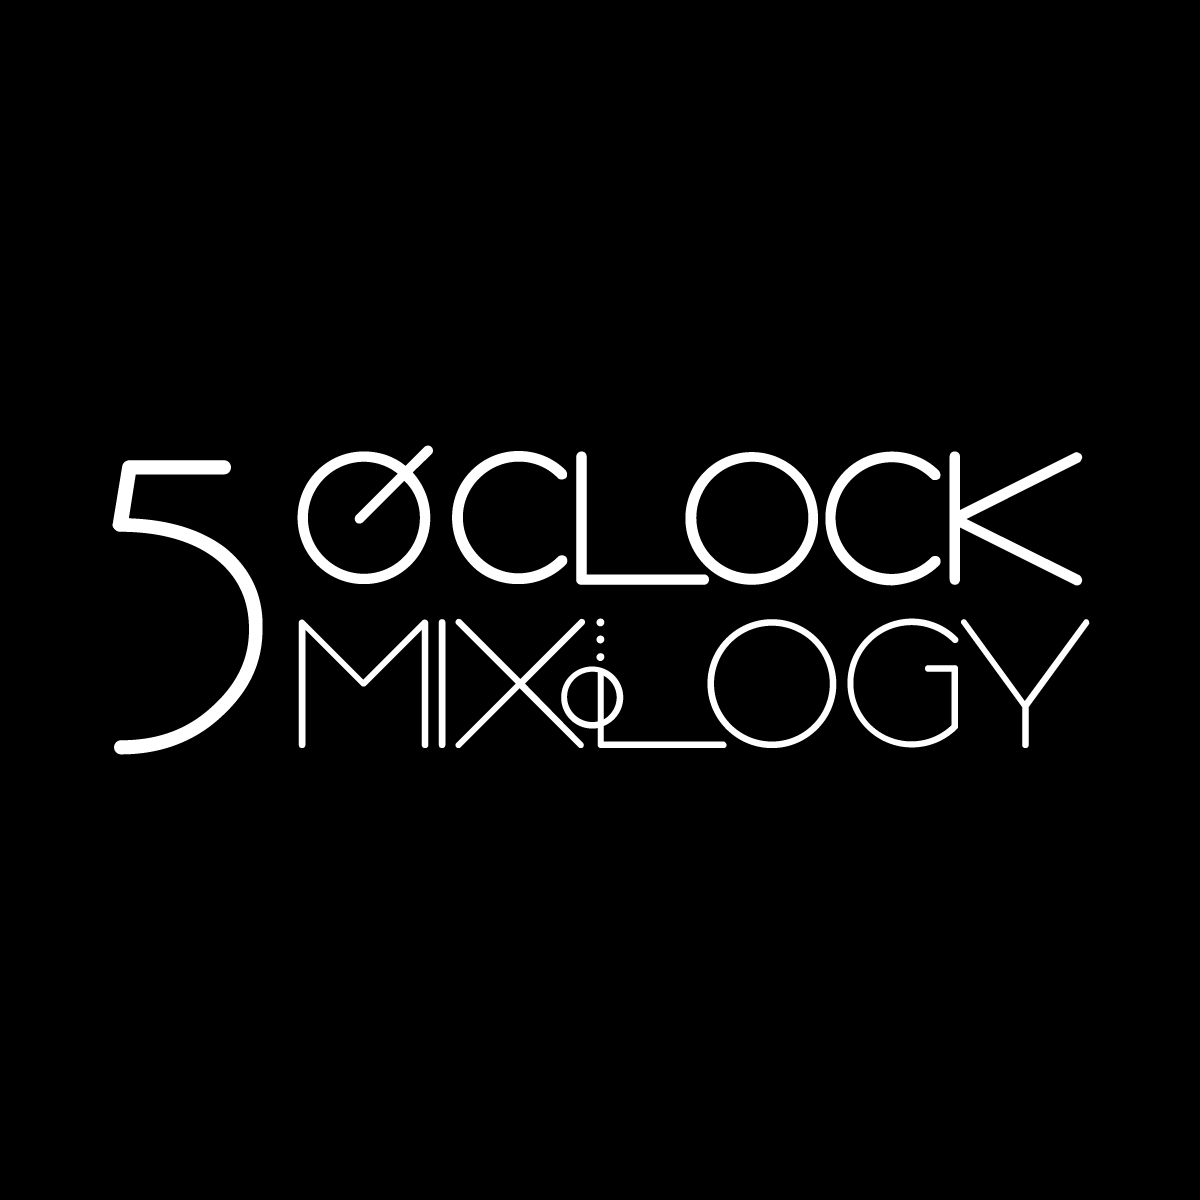 5 O’Clock Mixology Branding